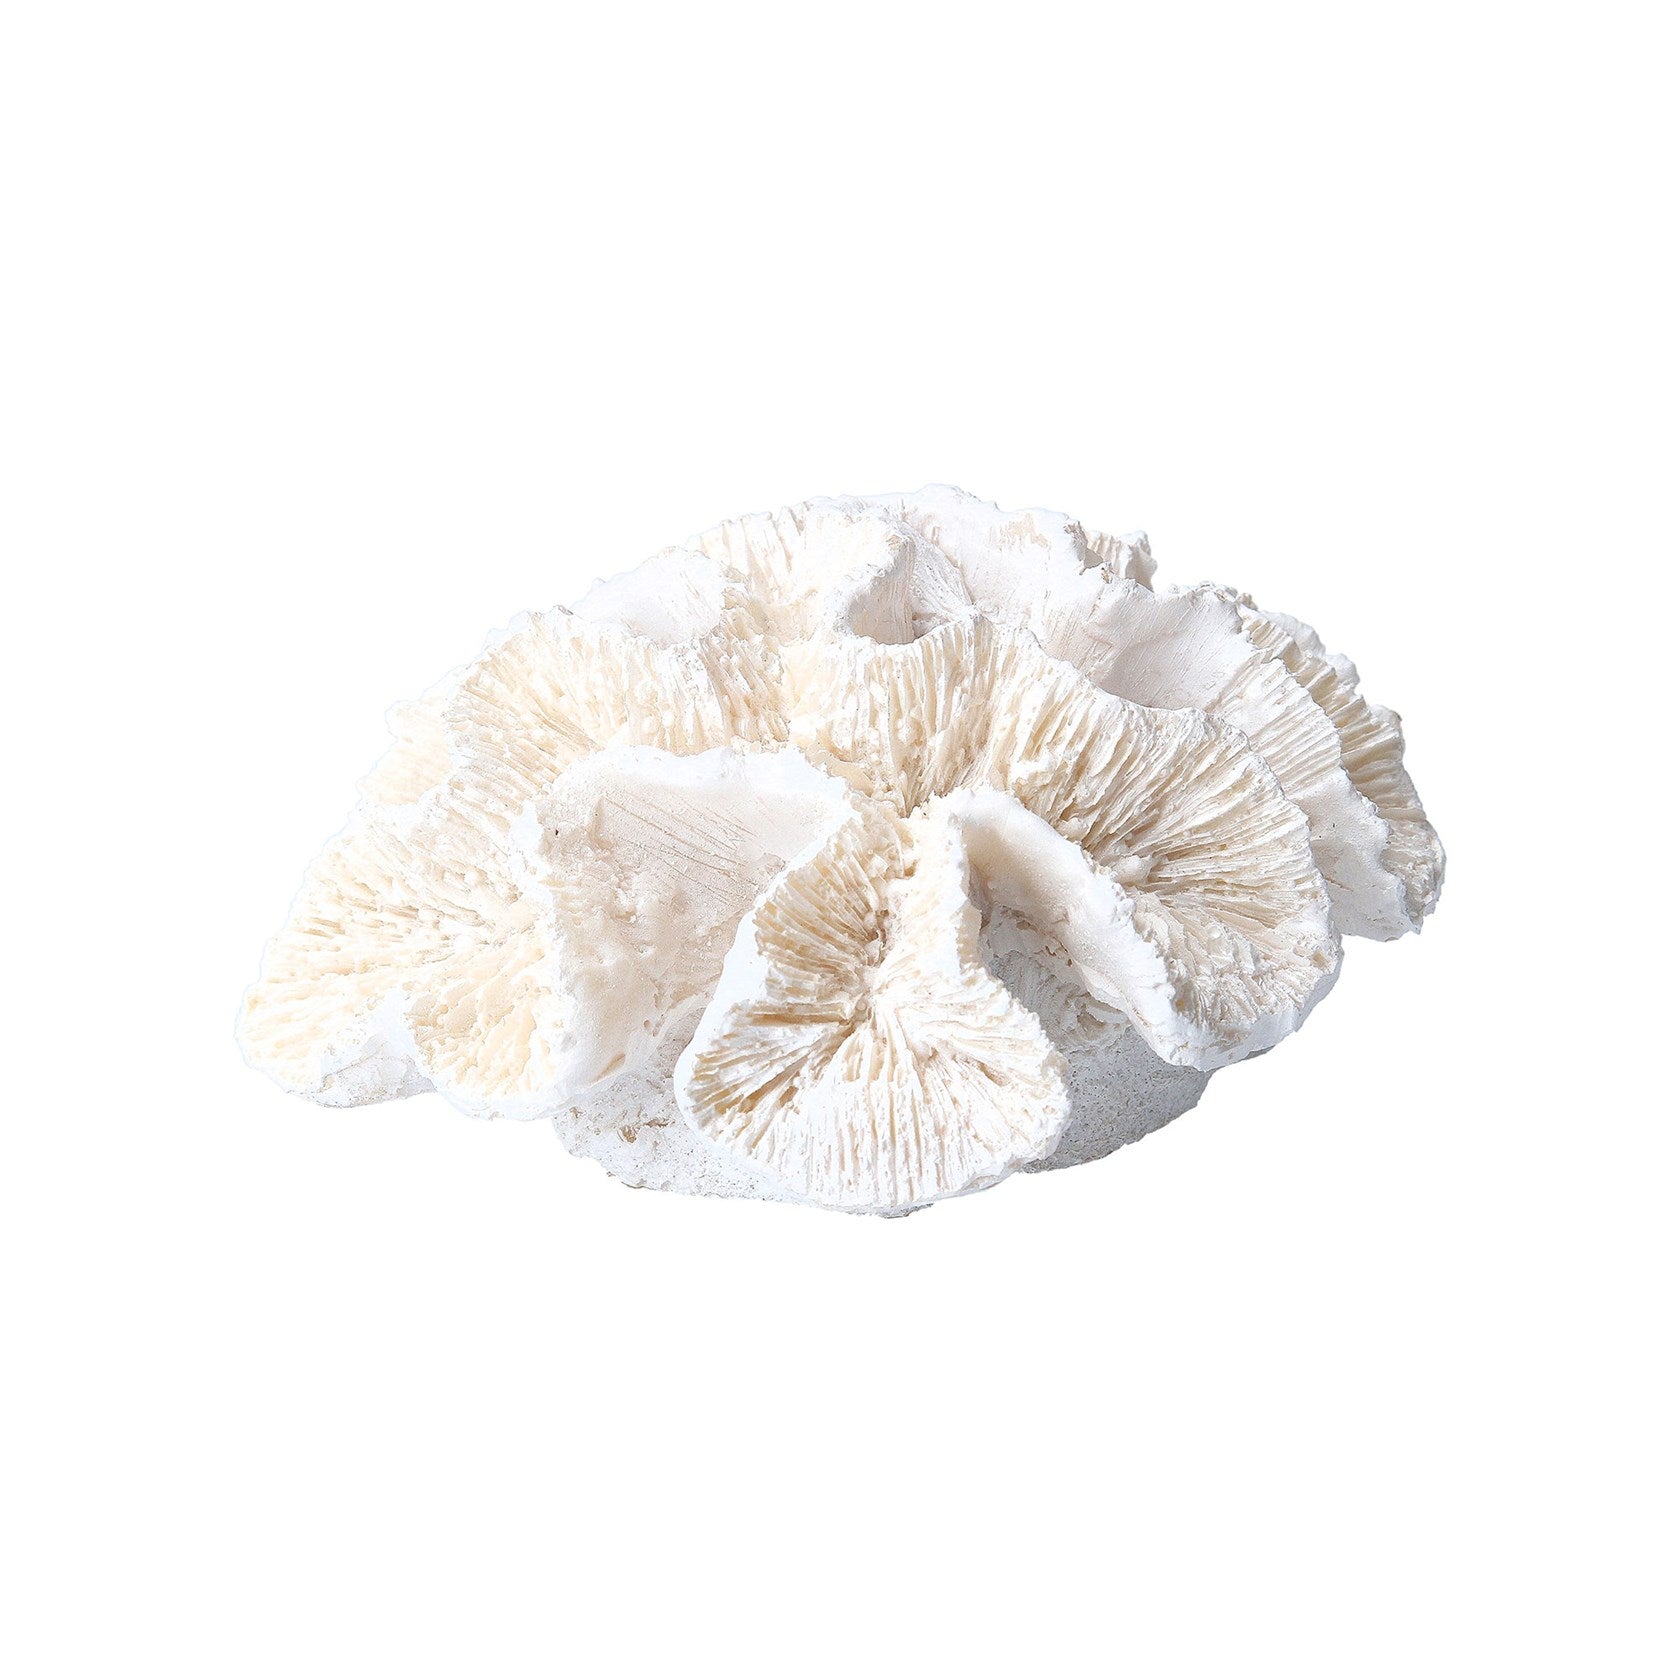 Faux Coral Frill Resin Ornament - Small